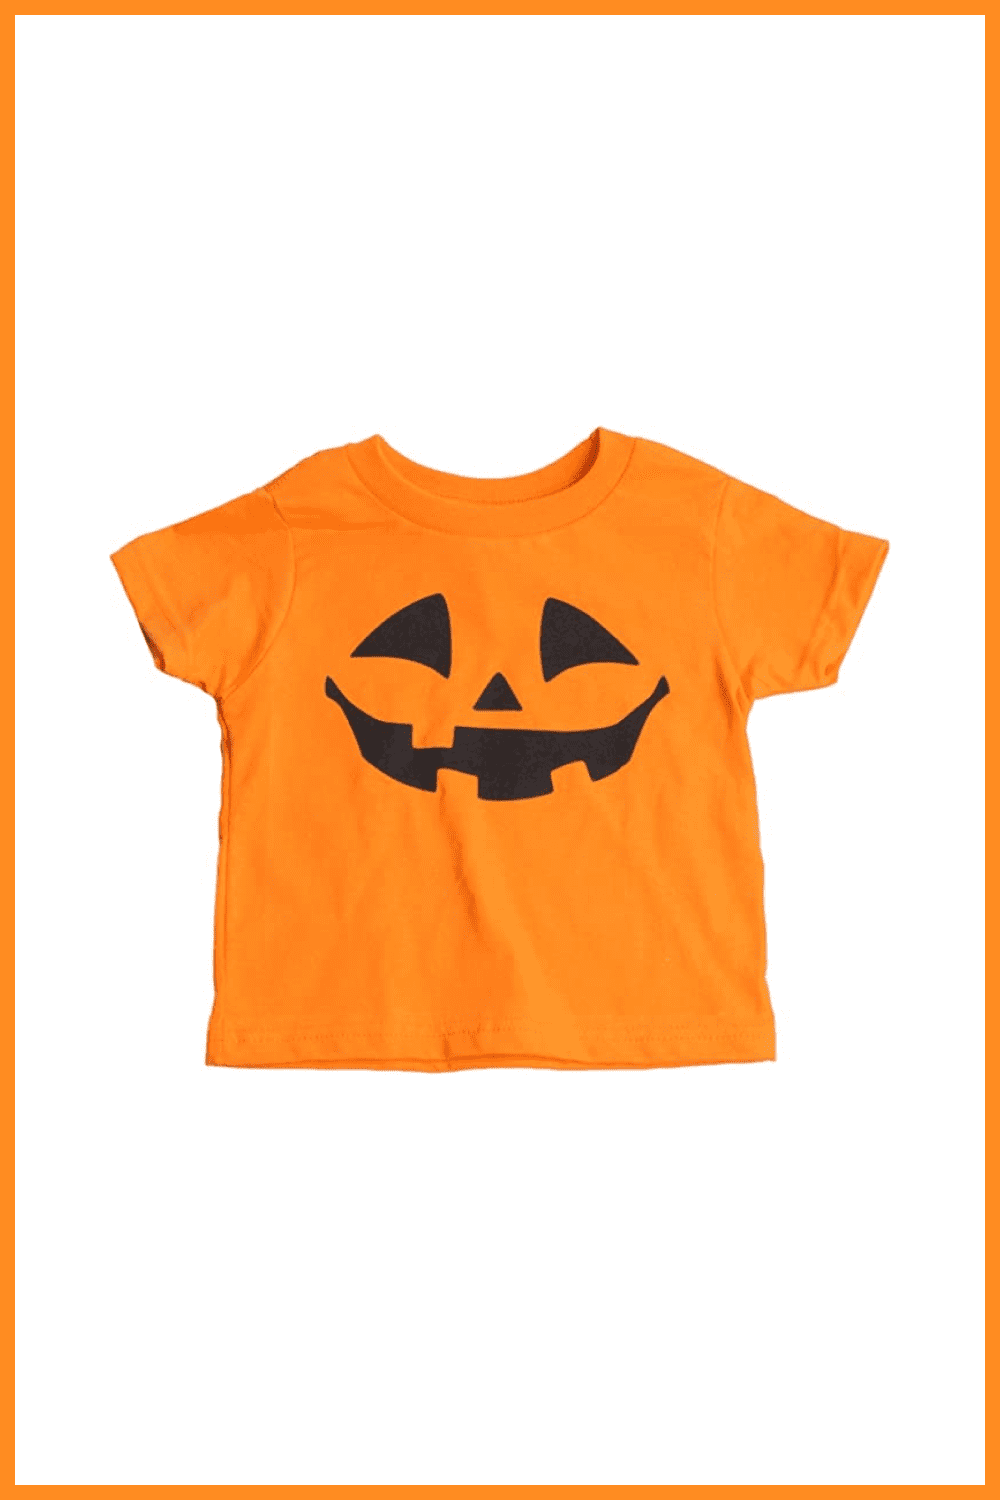 Orange t-shirt with Pumpkin Face Jack O' Lantern.